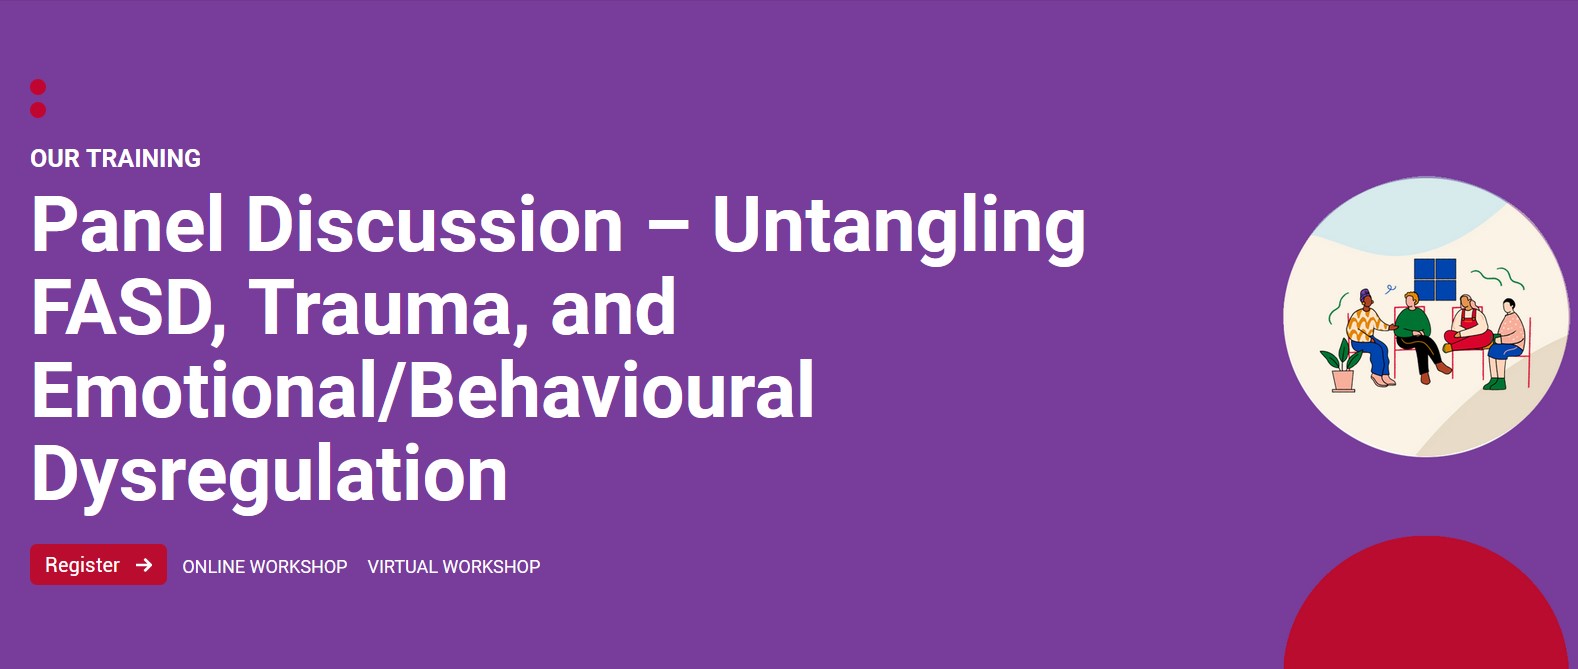 Untangling FASD, Trauma, and Emotional/Behavioural Dysregulation